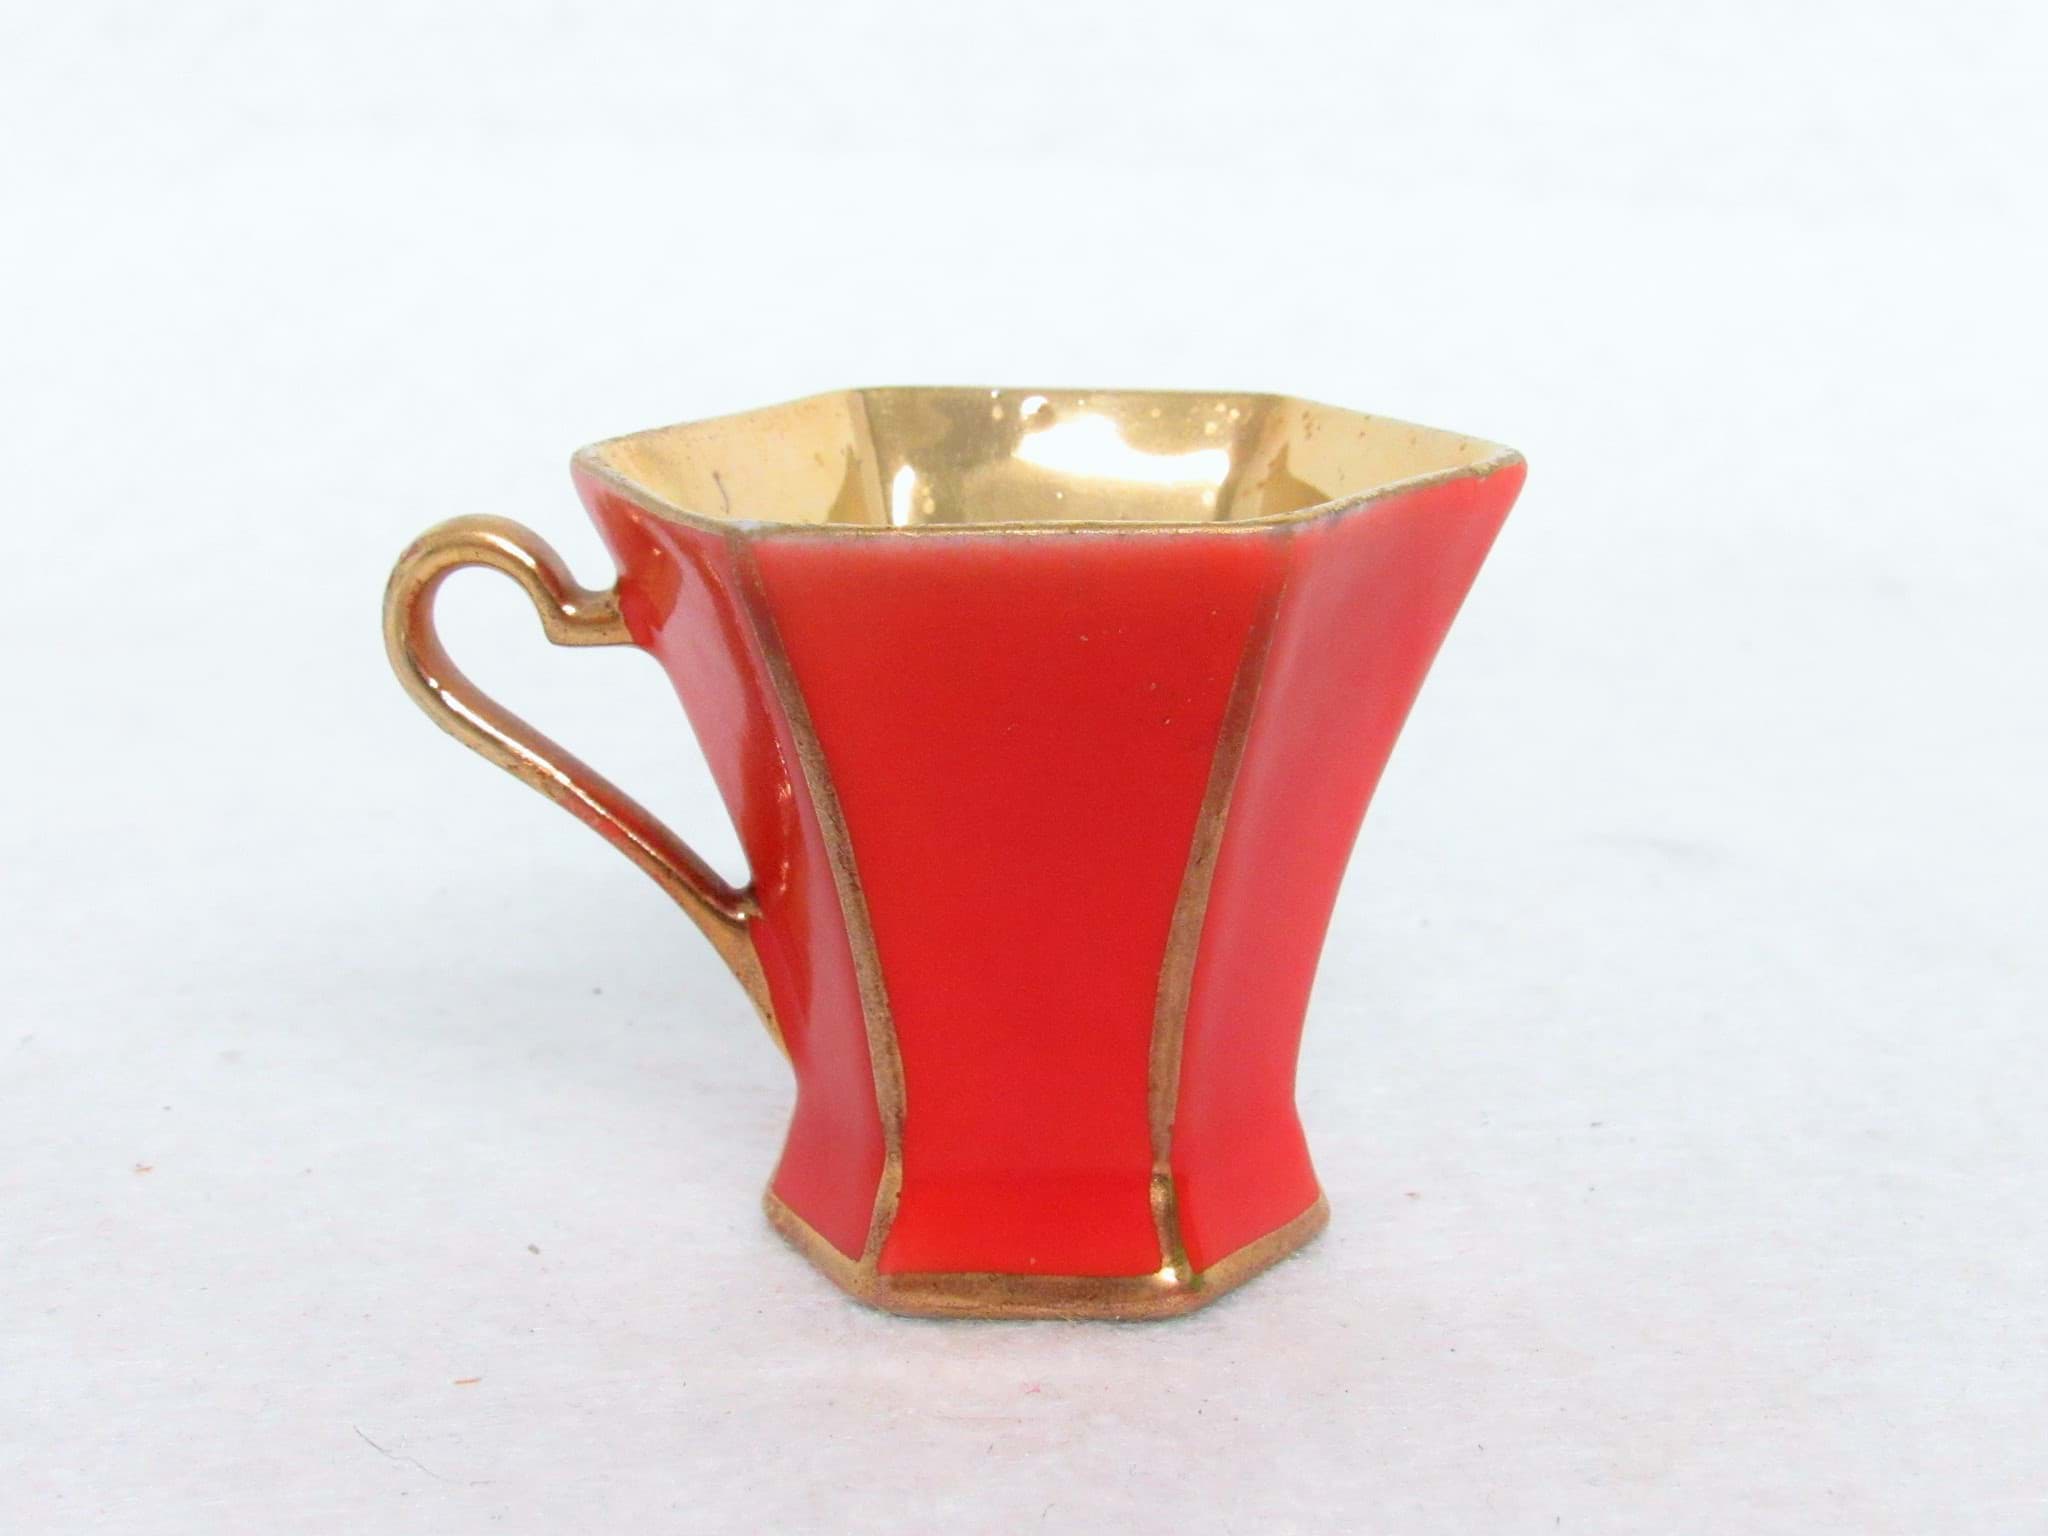 Picture of Biedermeier Porzellan Tasse wohl um 1830/40, Rot & Gold, antik, Spielzeug Modell